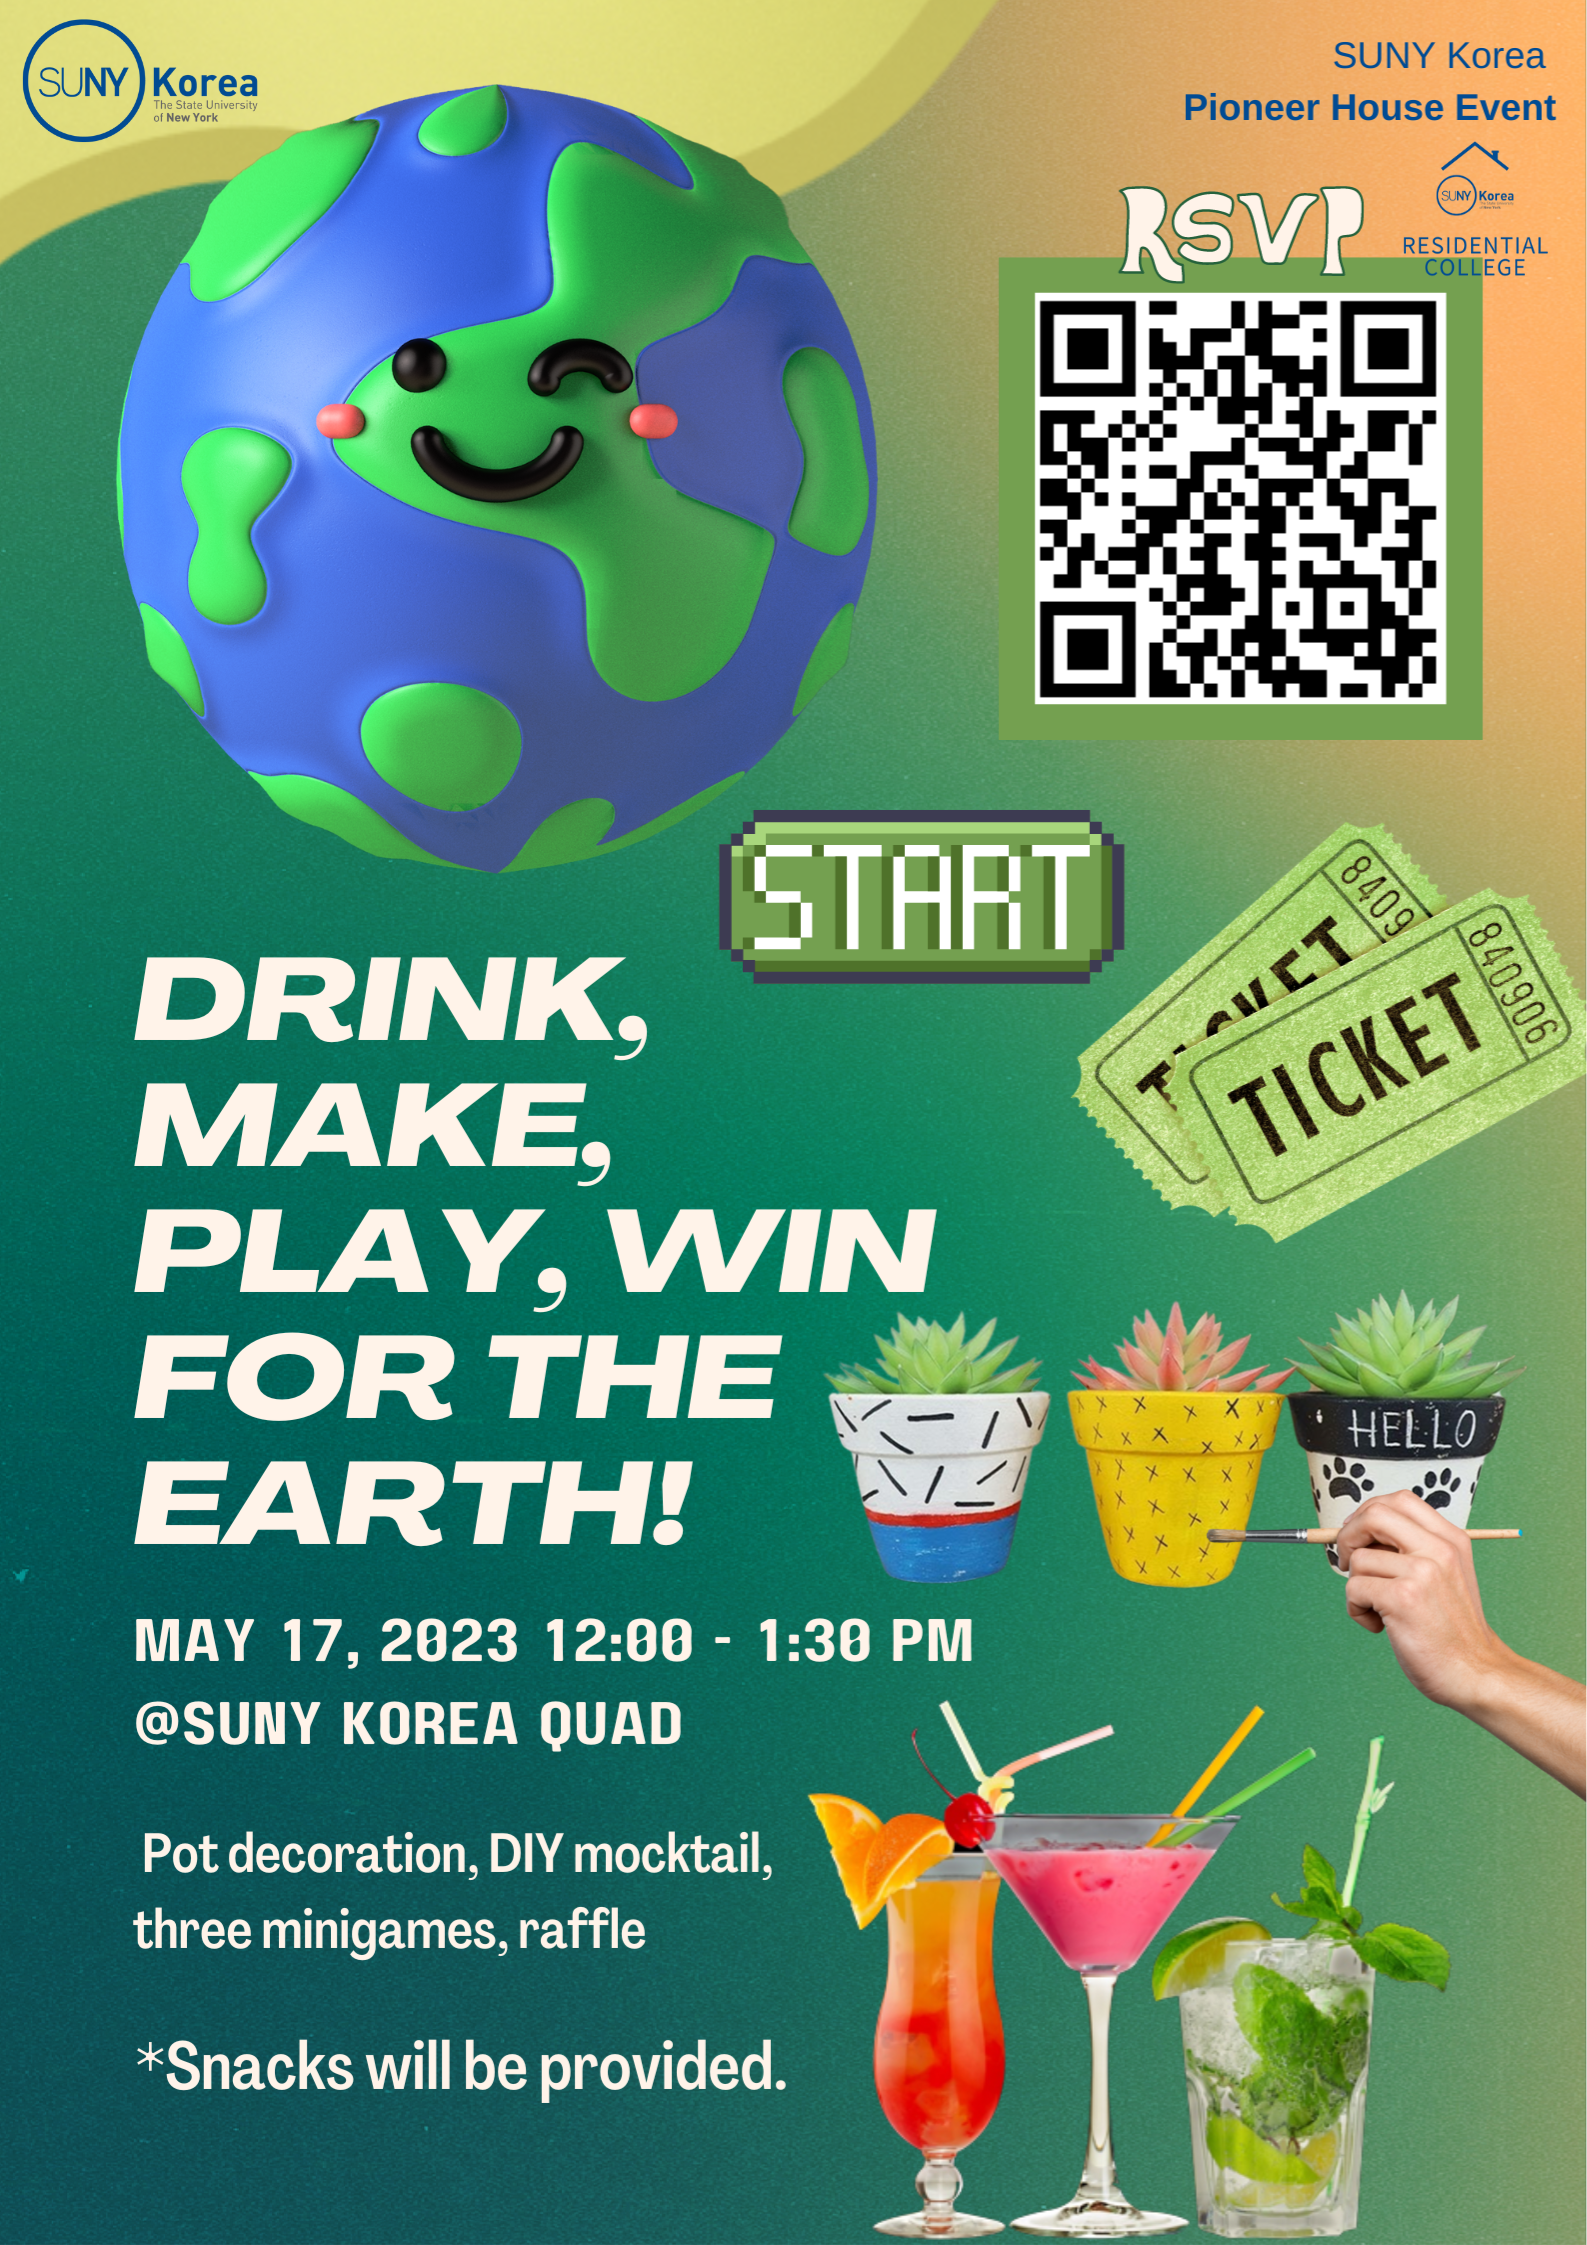 SUNY Korea SUNY Korea Pioneer House Event SUNY Korea RESIDENTIAL COLLEGE RSVP QR코드(https://docs.google.com/forms/d/e/1FAIpQLSeLHlJCS_s1IExPpQ5EPCbeLZ_Mi-Usk7OUS93vwv4DFMUk6g/closedform) START / DRINK, MAKE, PLAYM WIN FOR THE EARTH! MAY 17, 2023 12:00~1:30PM @SUNY KOREA QUAD Pot decoration, DIY mocktail, three minigames, raffle *Snacks will be provided.